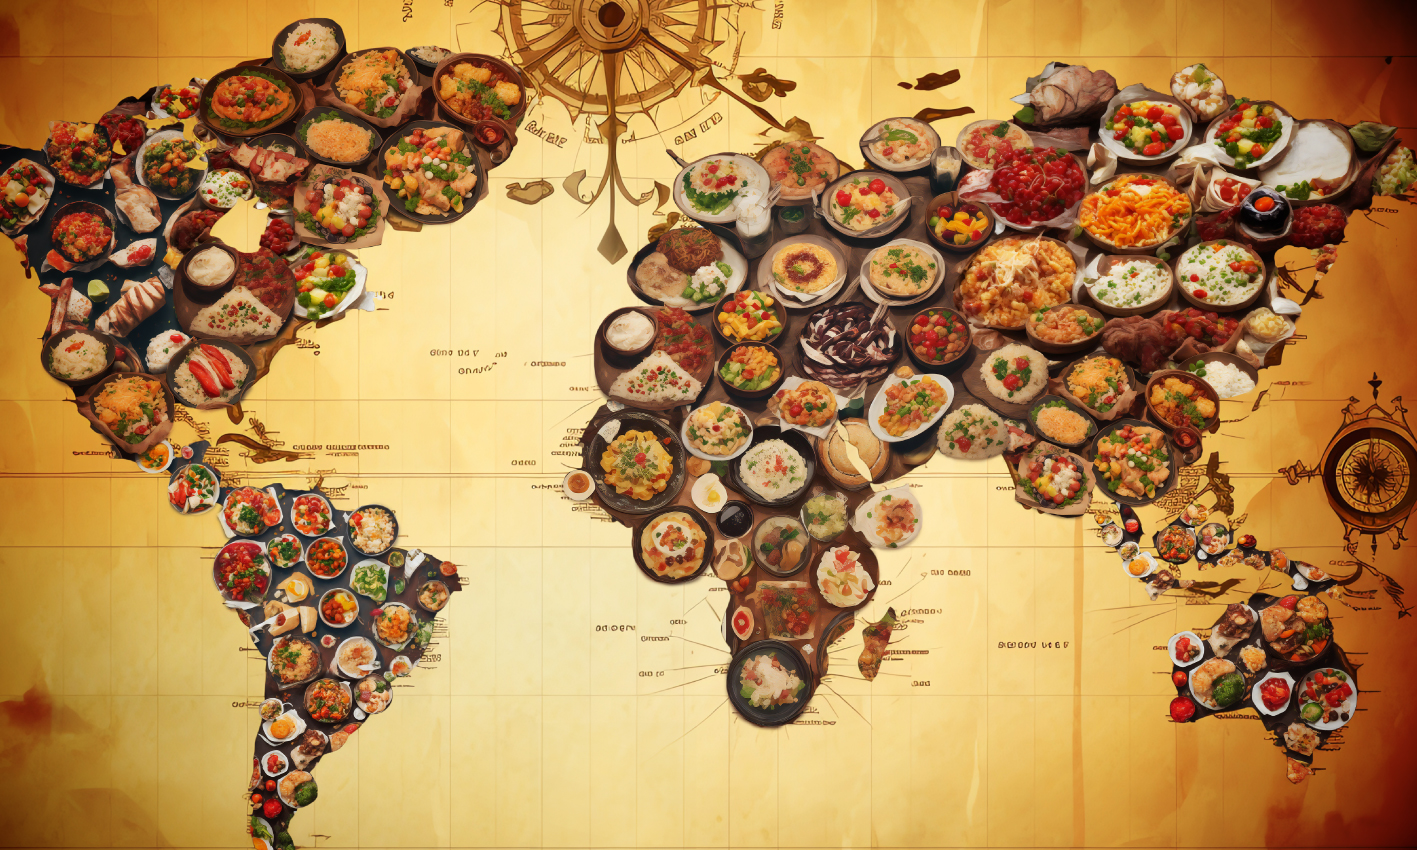 Around the World Buffet Dinner